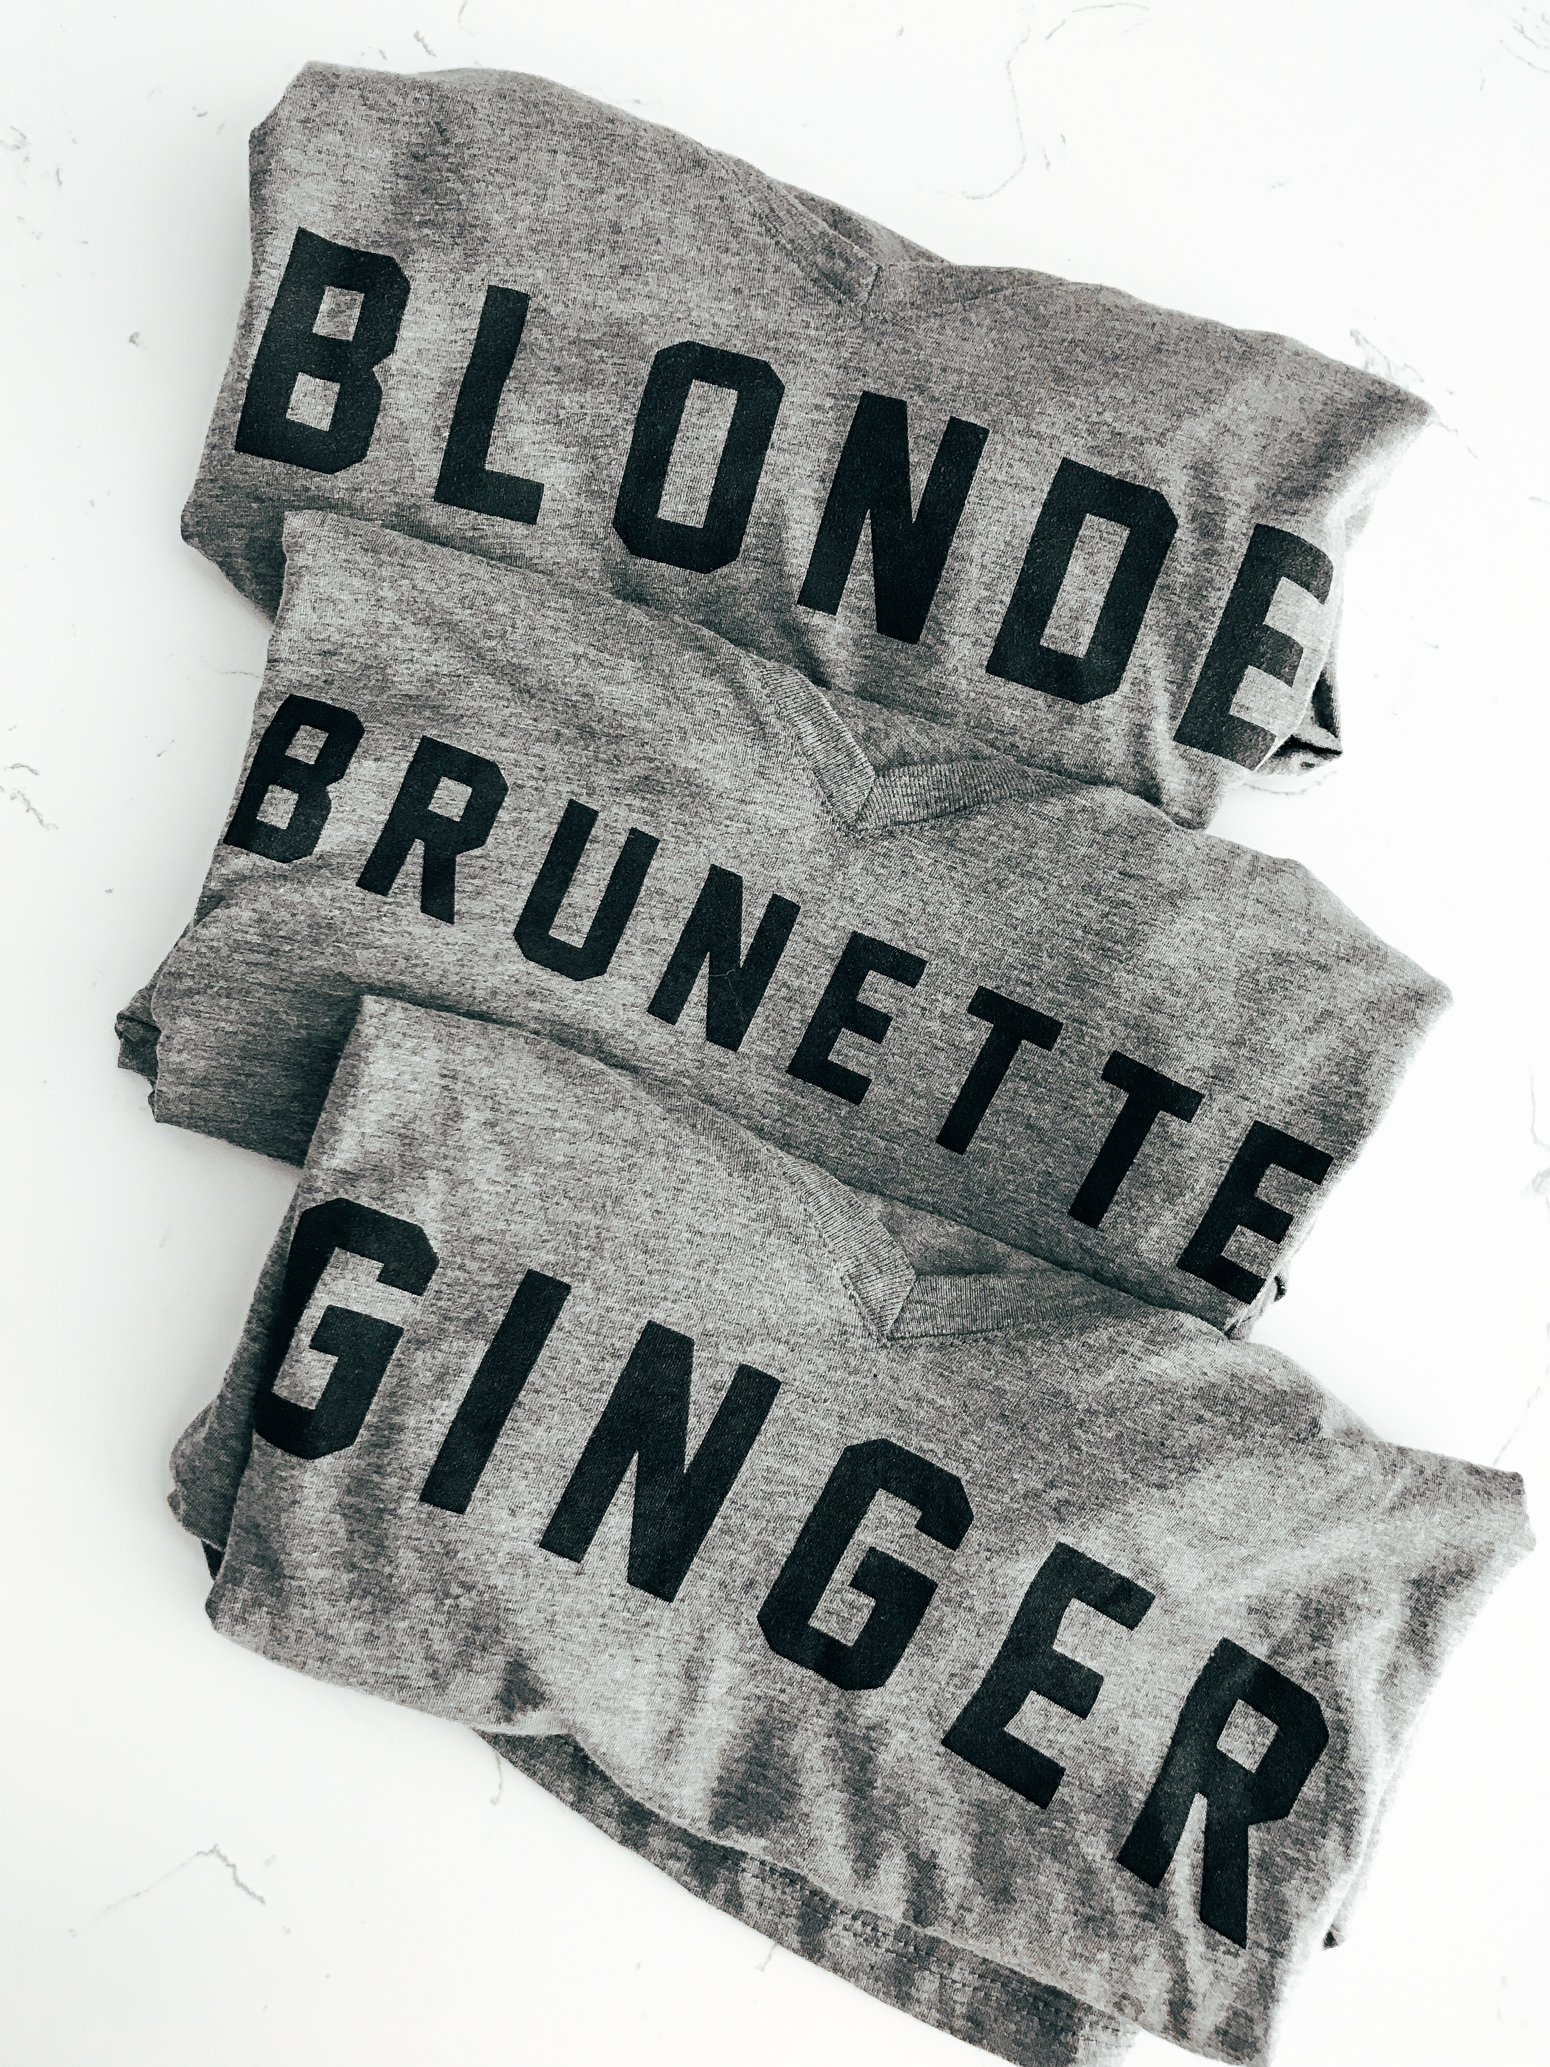 Blondie in the City | Blonde, Brunette, & Ginger BFF Tee's | Cute Girly Tee